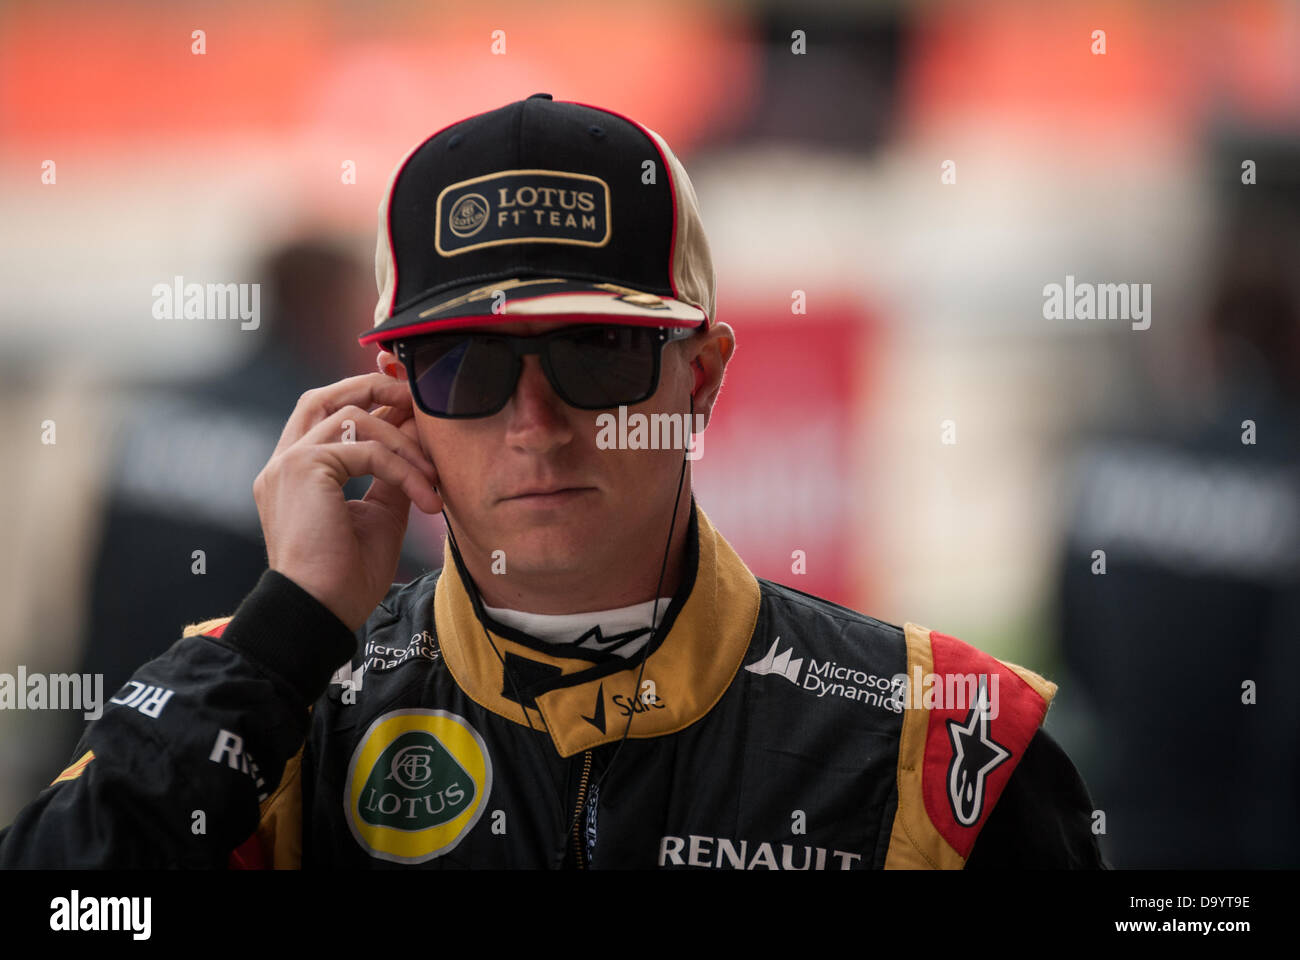 Kimi Raikkonen at the British Formula One (F1) Grand Prix, Silverstone, UK Stock Photo